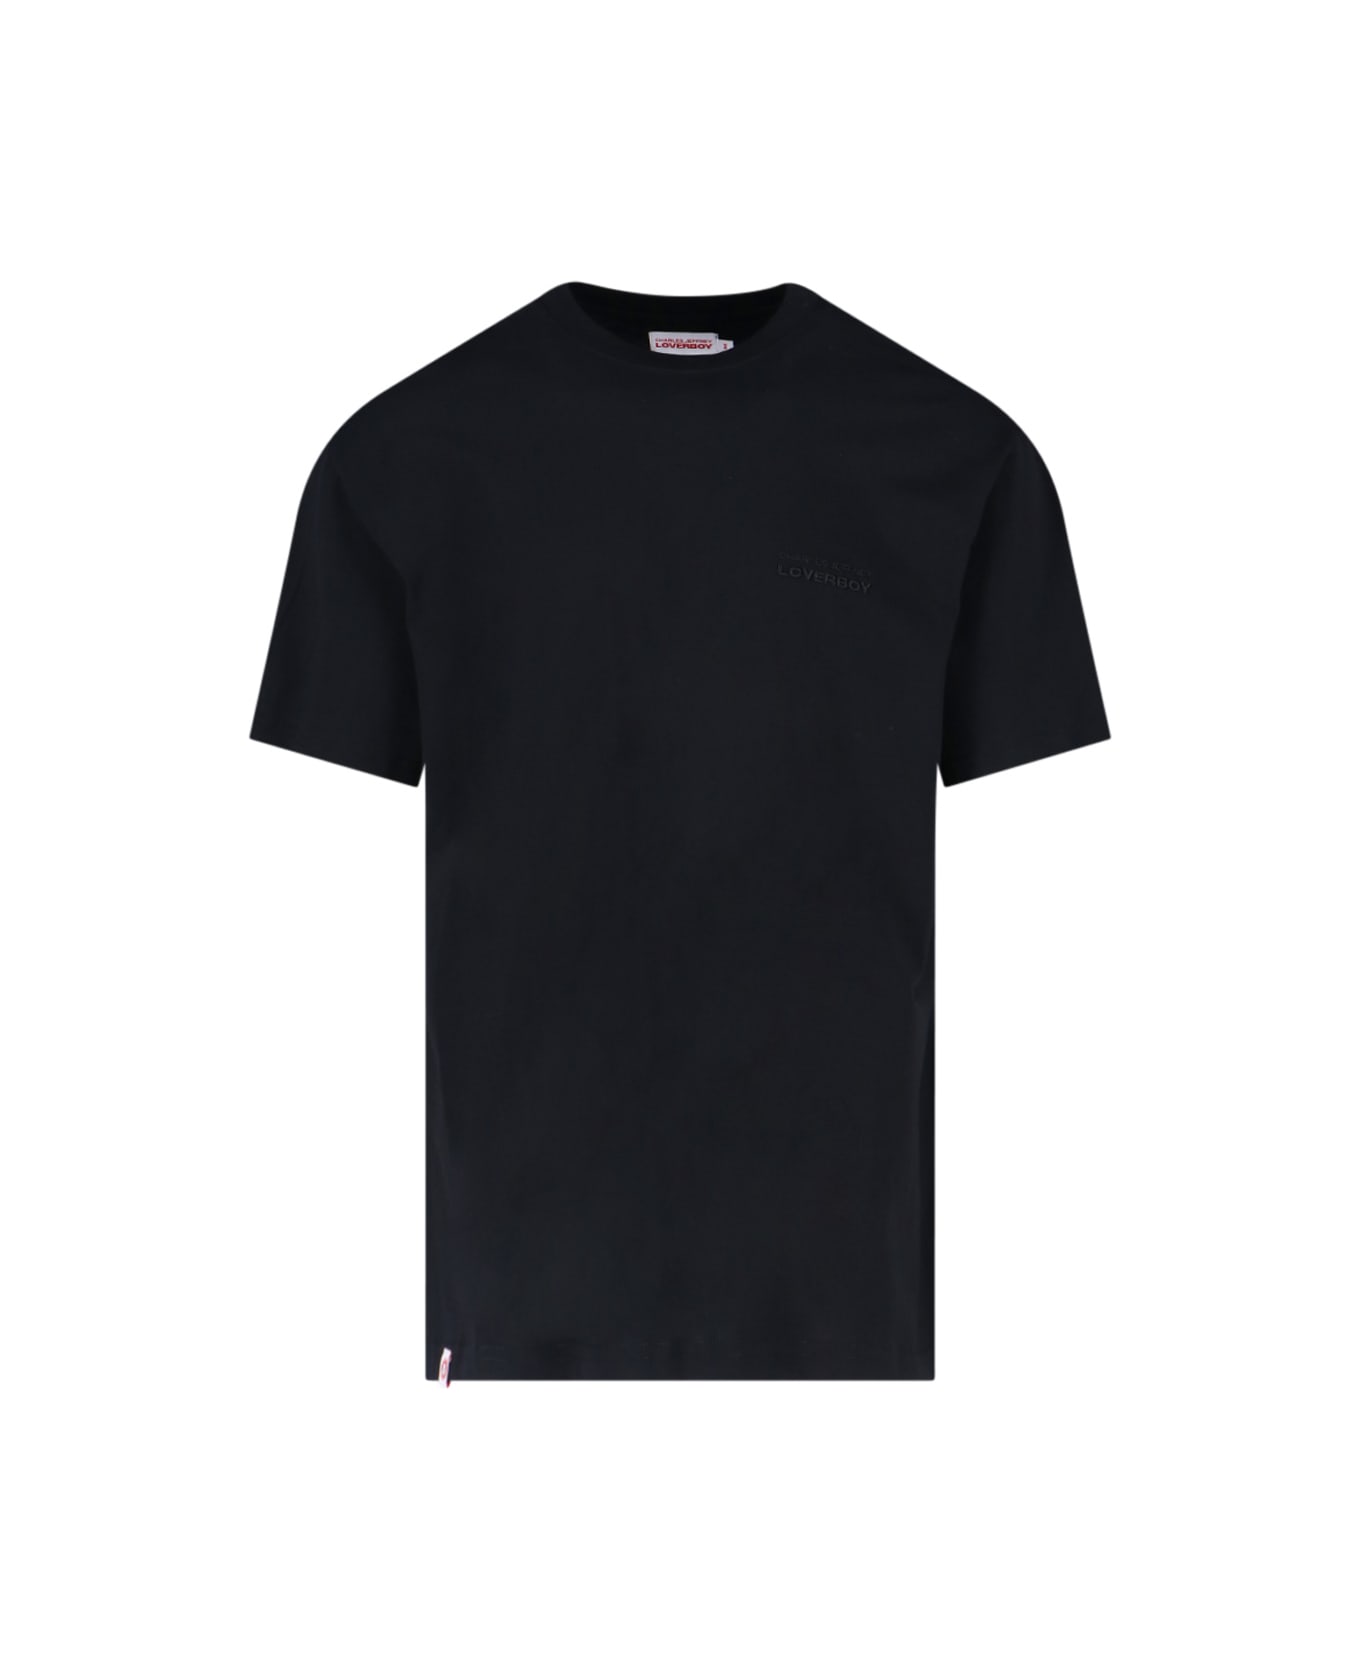 Charles Jeffrey Loverboy T-Shirt - Black